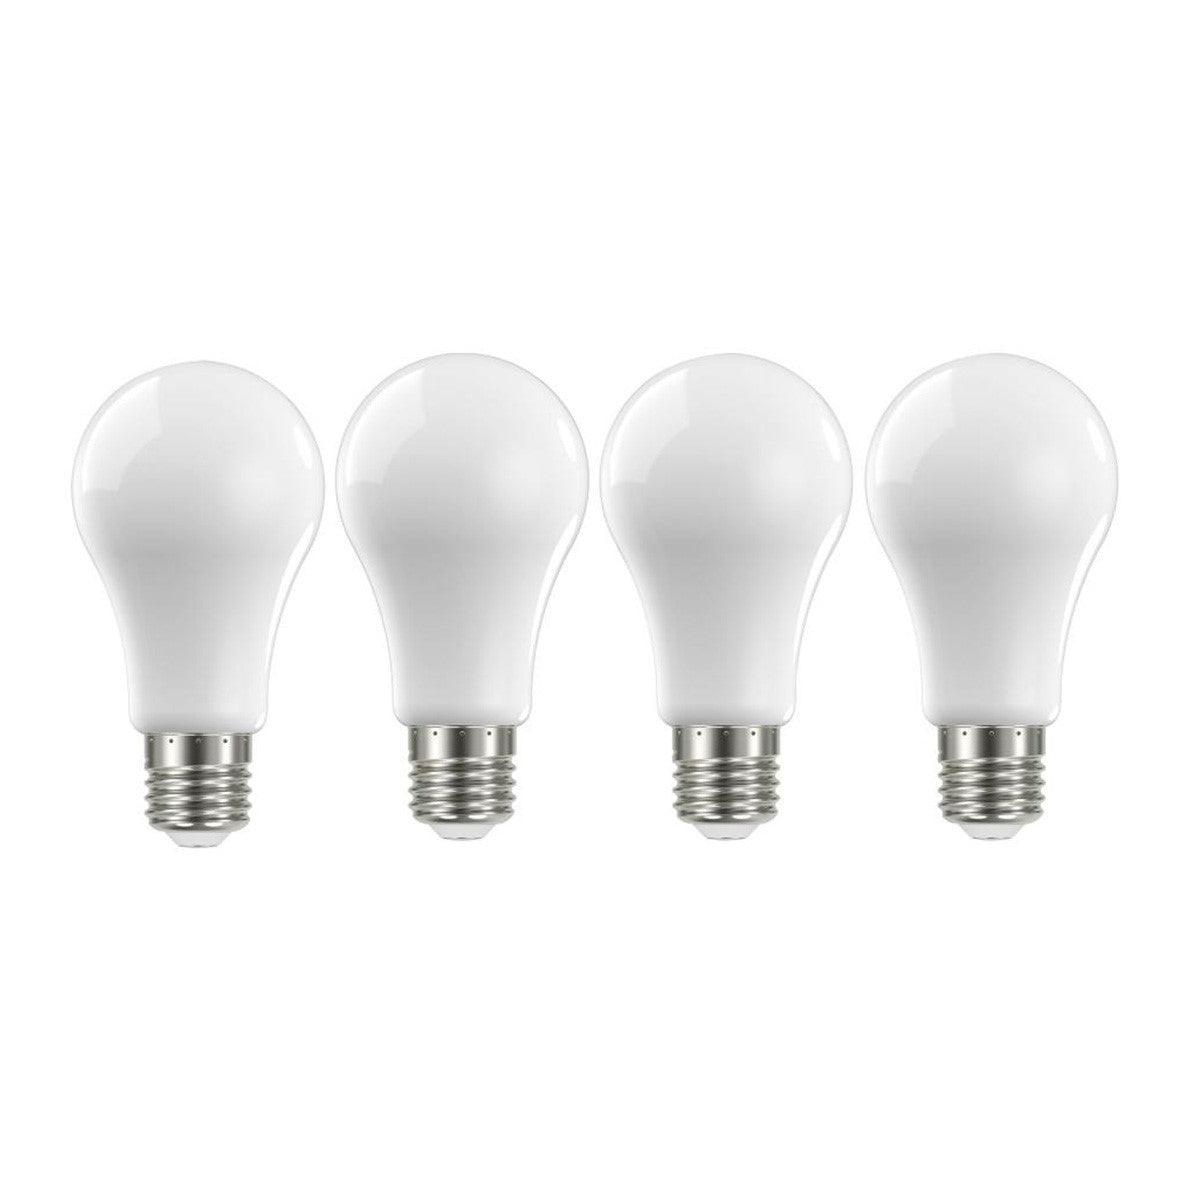 A19 LED Bulb, 100W Equivalent, 14 Watt, 1500 Lumens, 3000K, E26 Medium Base, Frosted Finish, Pack Of 4 - Bees Lighting